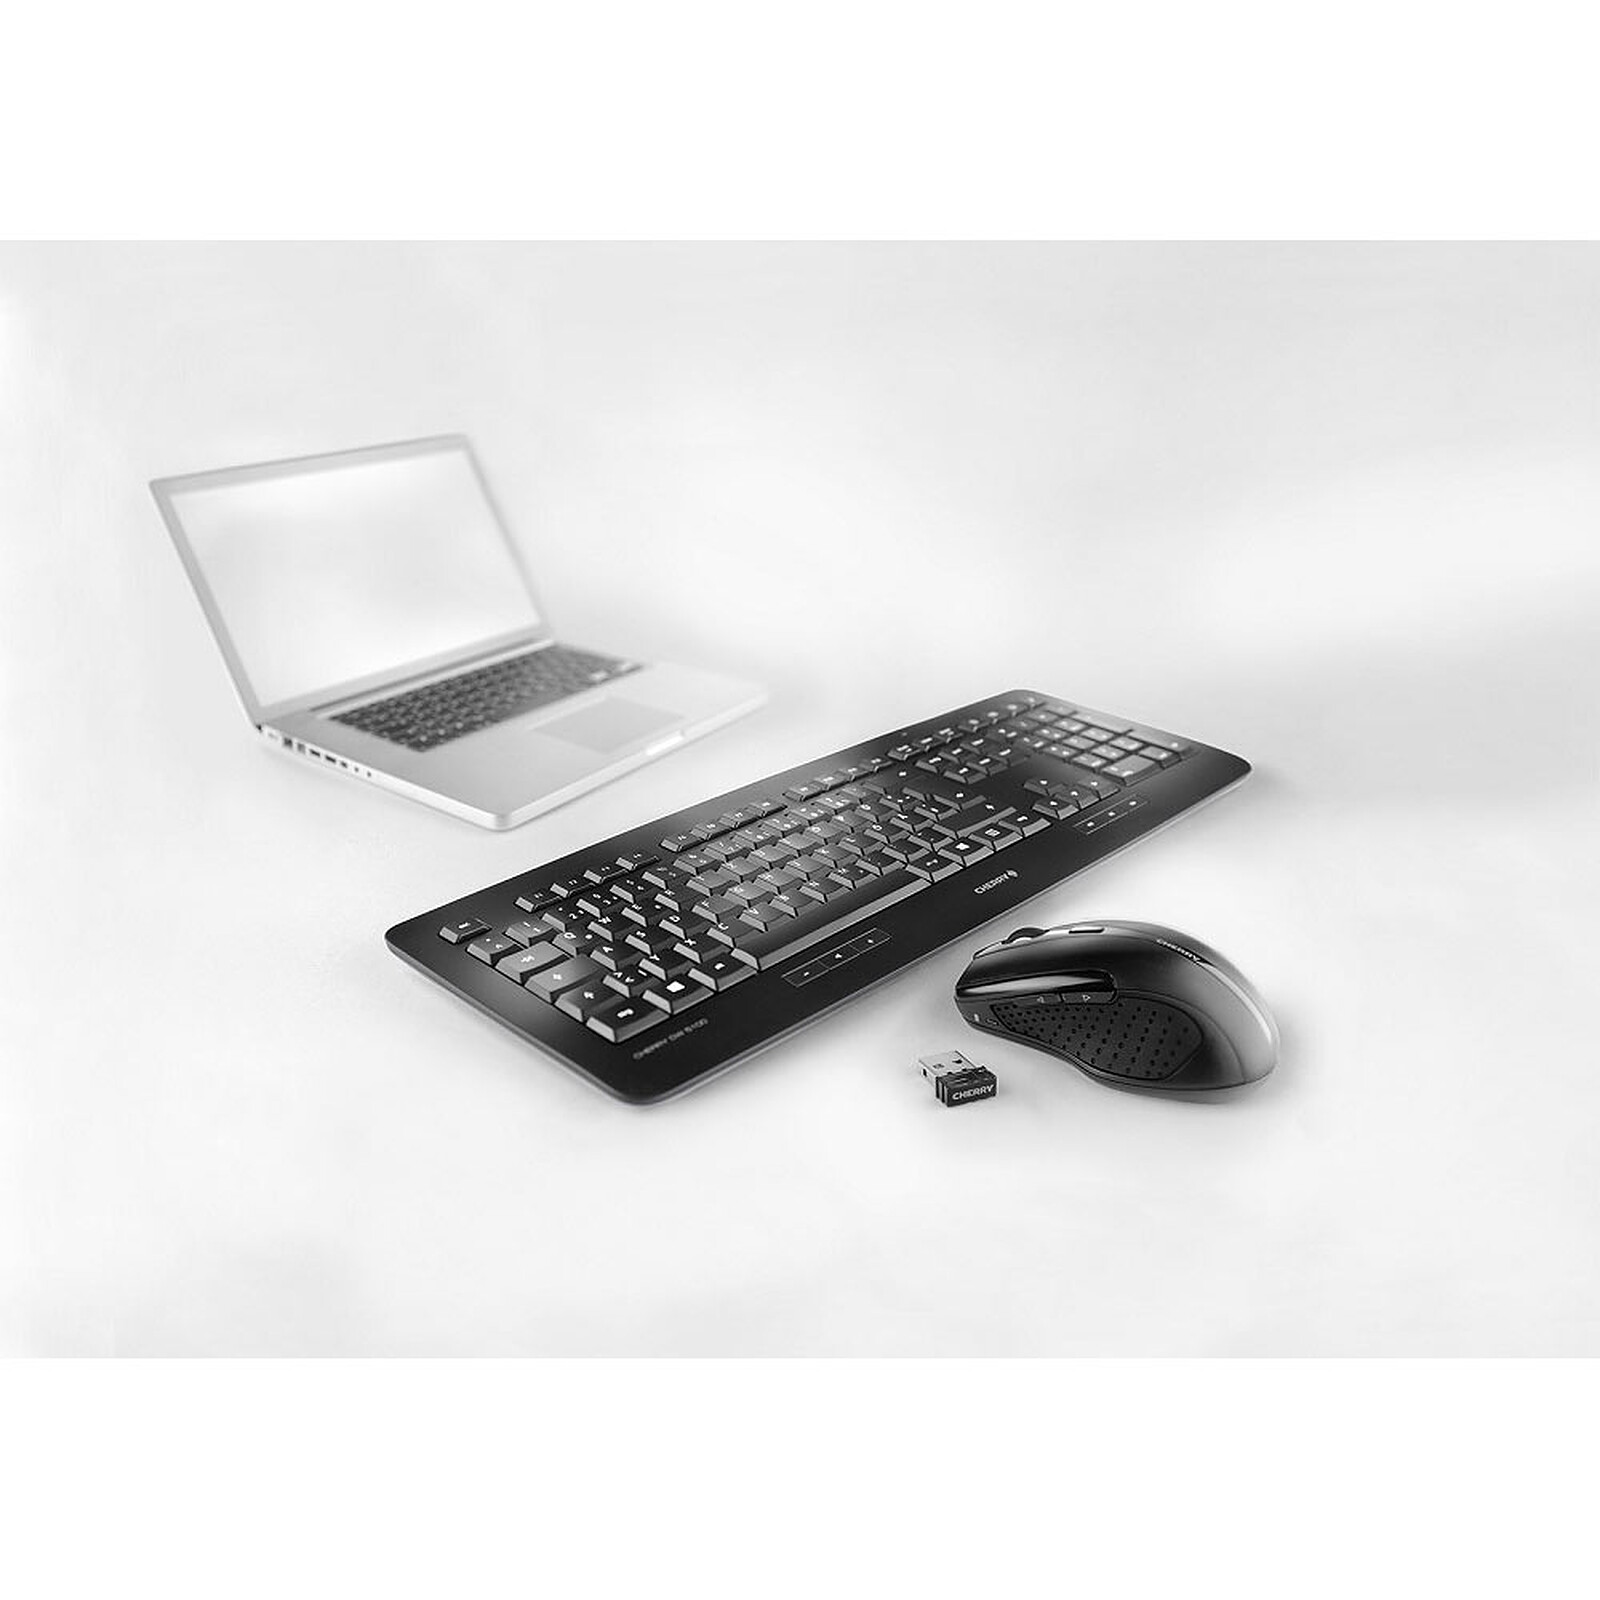 Cherry DW 5100 v2 - LDLC mouse warranty - Keyboard set 3-year 